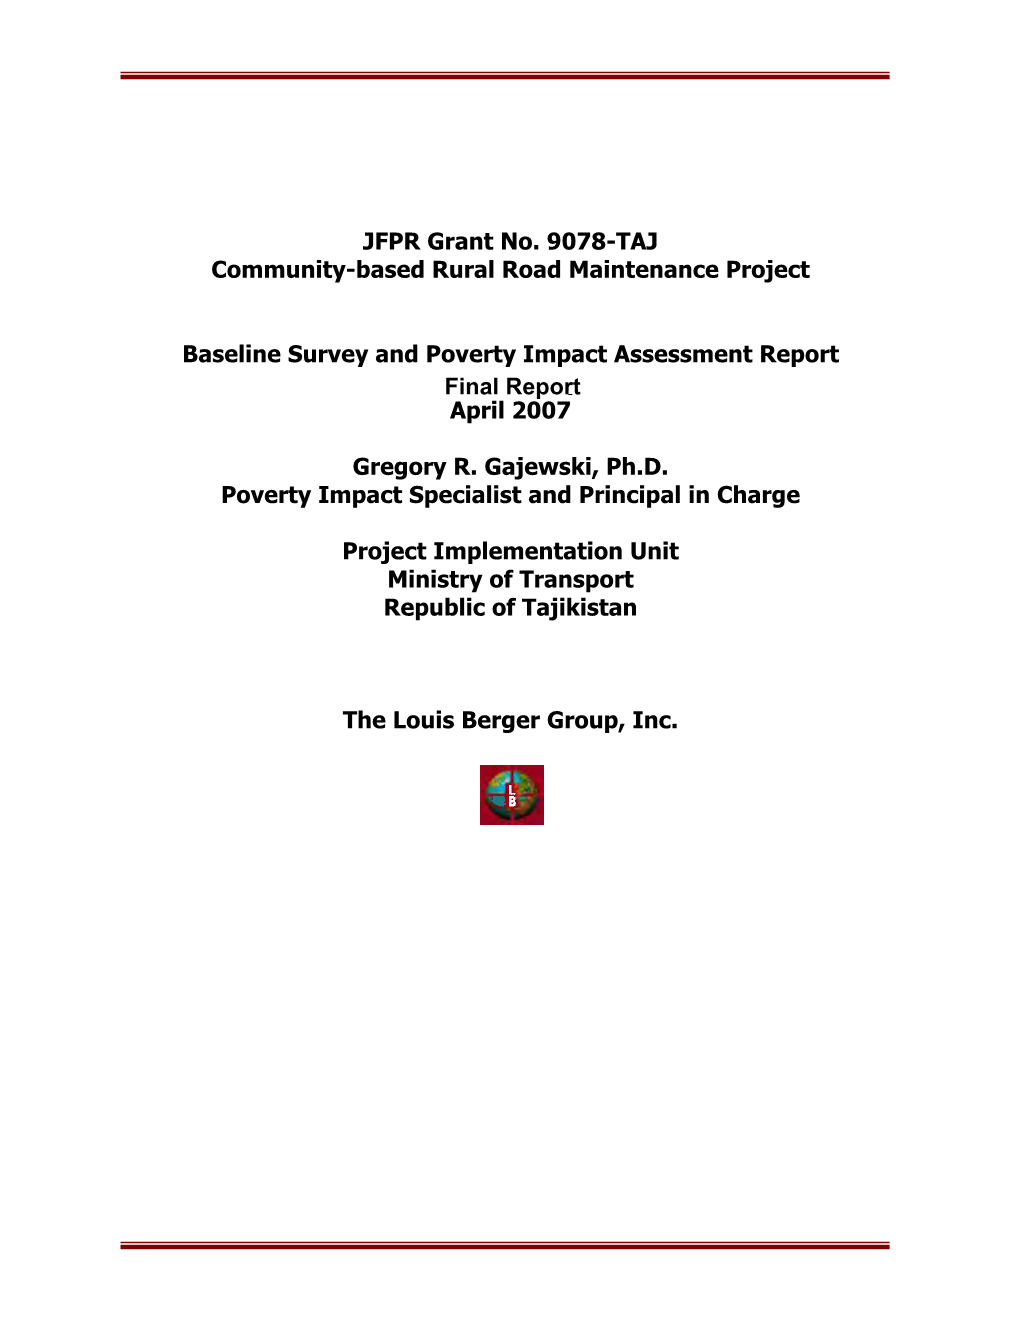 Final Report April 2007